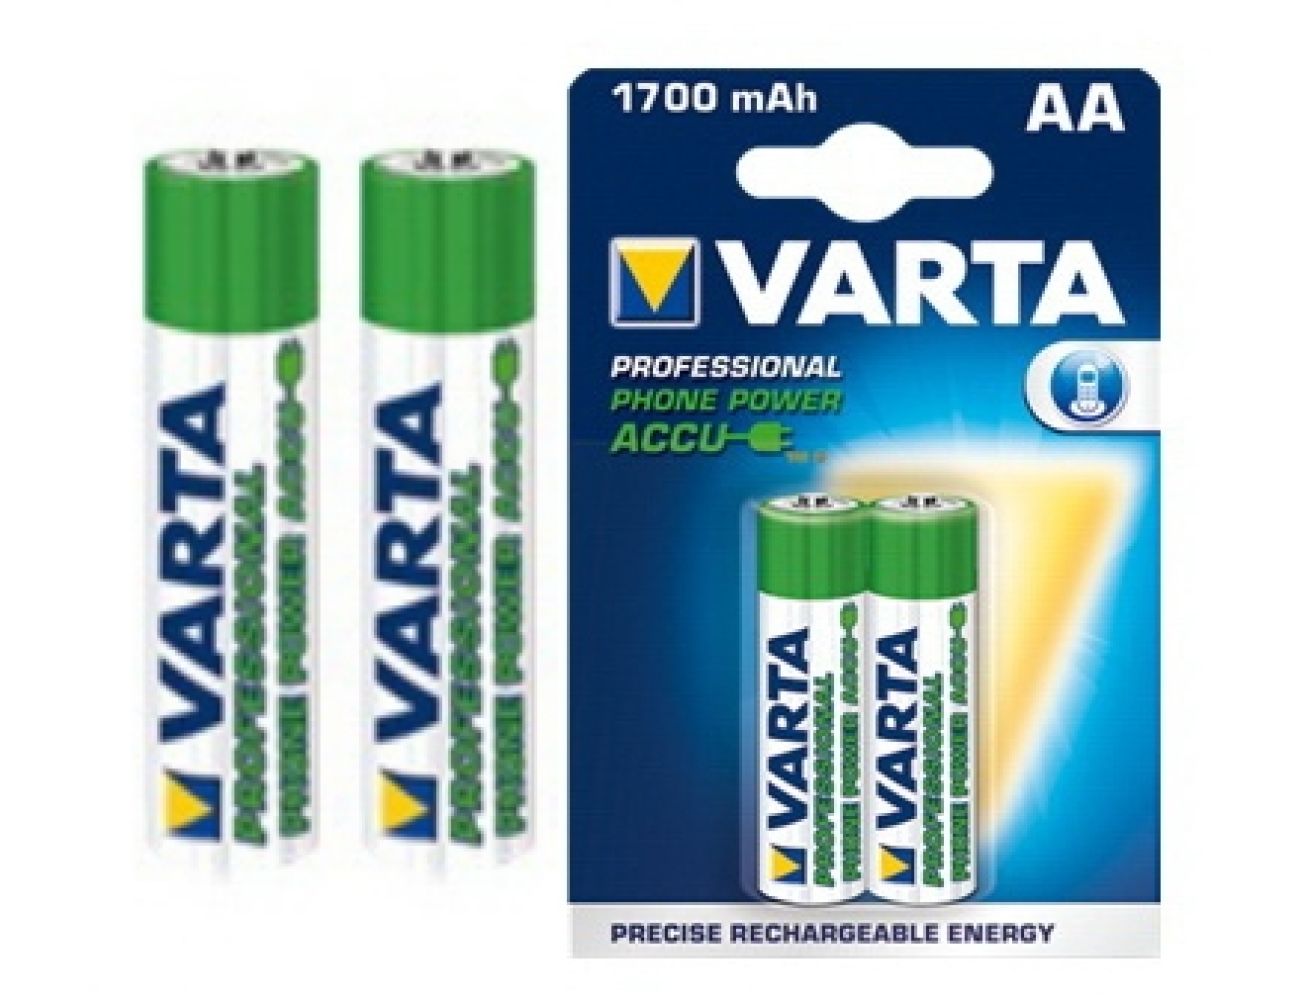 Аккумуляторные батарейки АА Varta 1700 mAh Professional Phone Power (HR6, 1700mAh, 1.2V, Ni-Mh) 58399201402